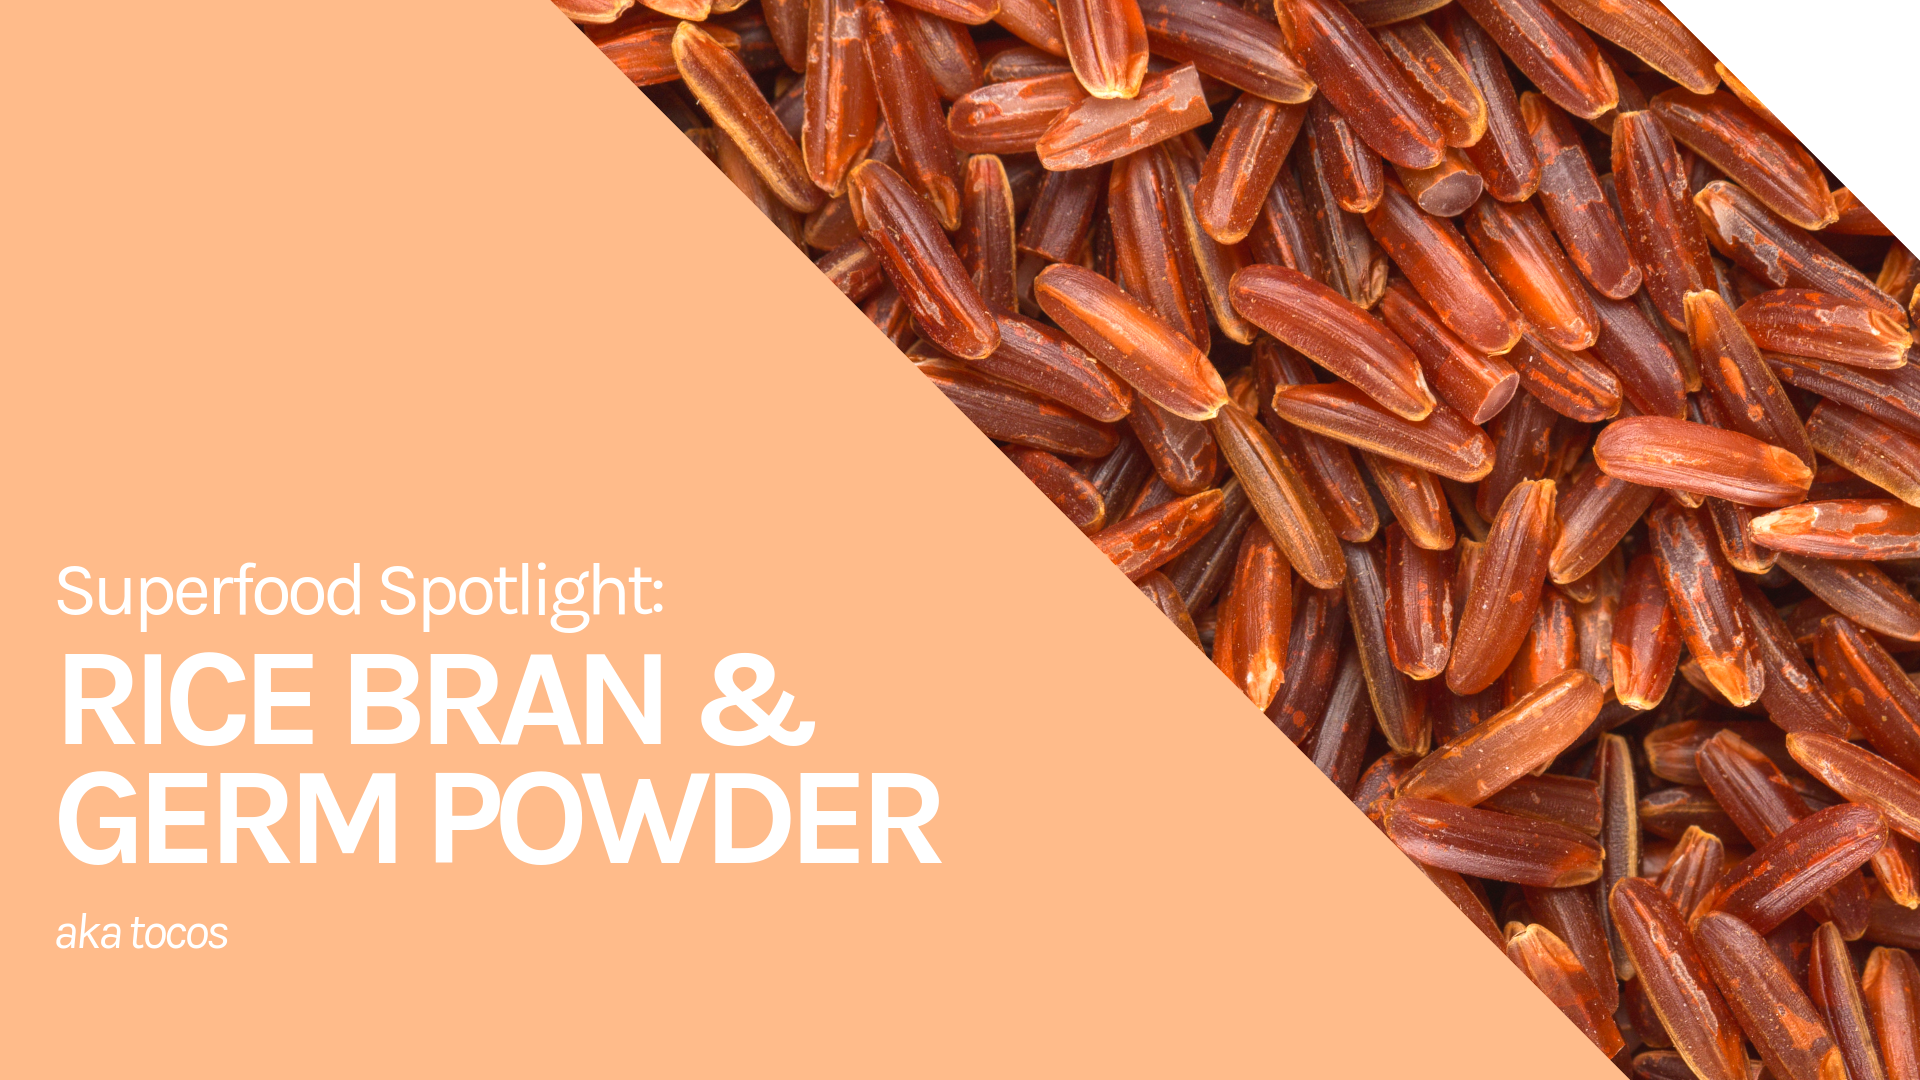 Superfood Spotlight: Rice Bran and Germ Powder